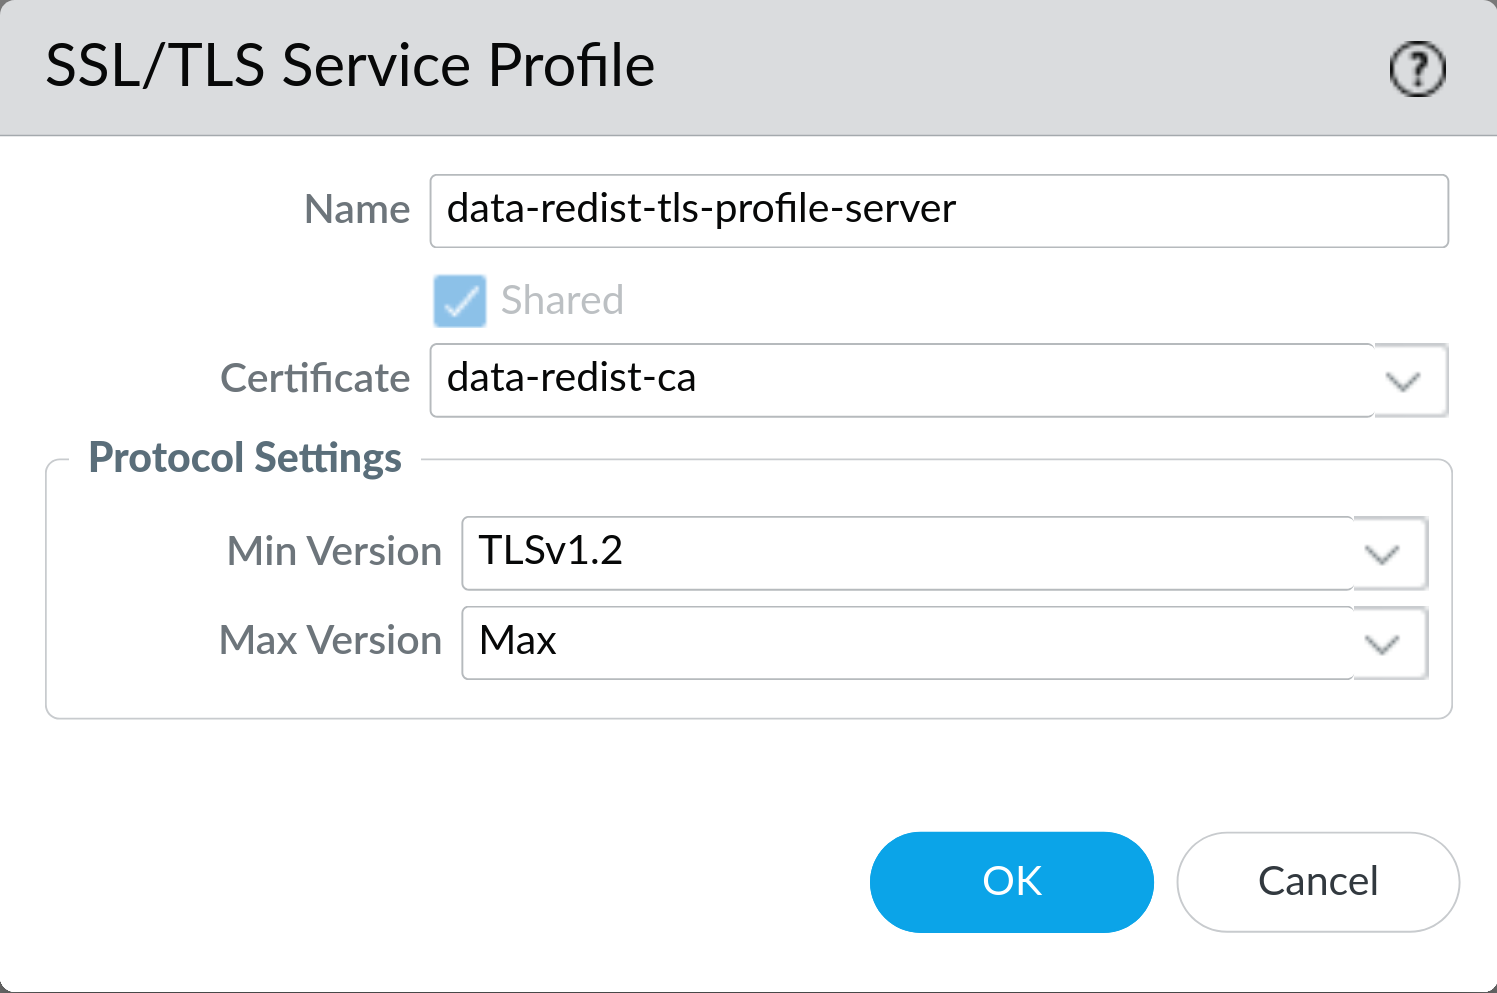 Configure an SSL/TLS service profile